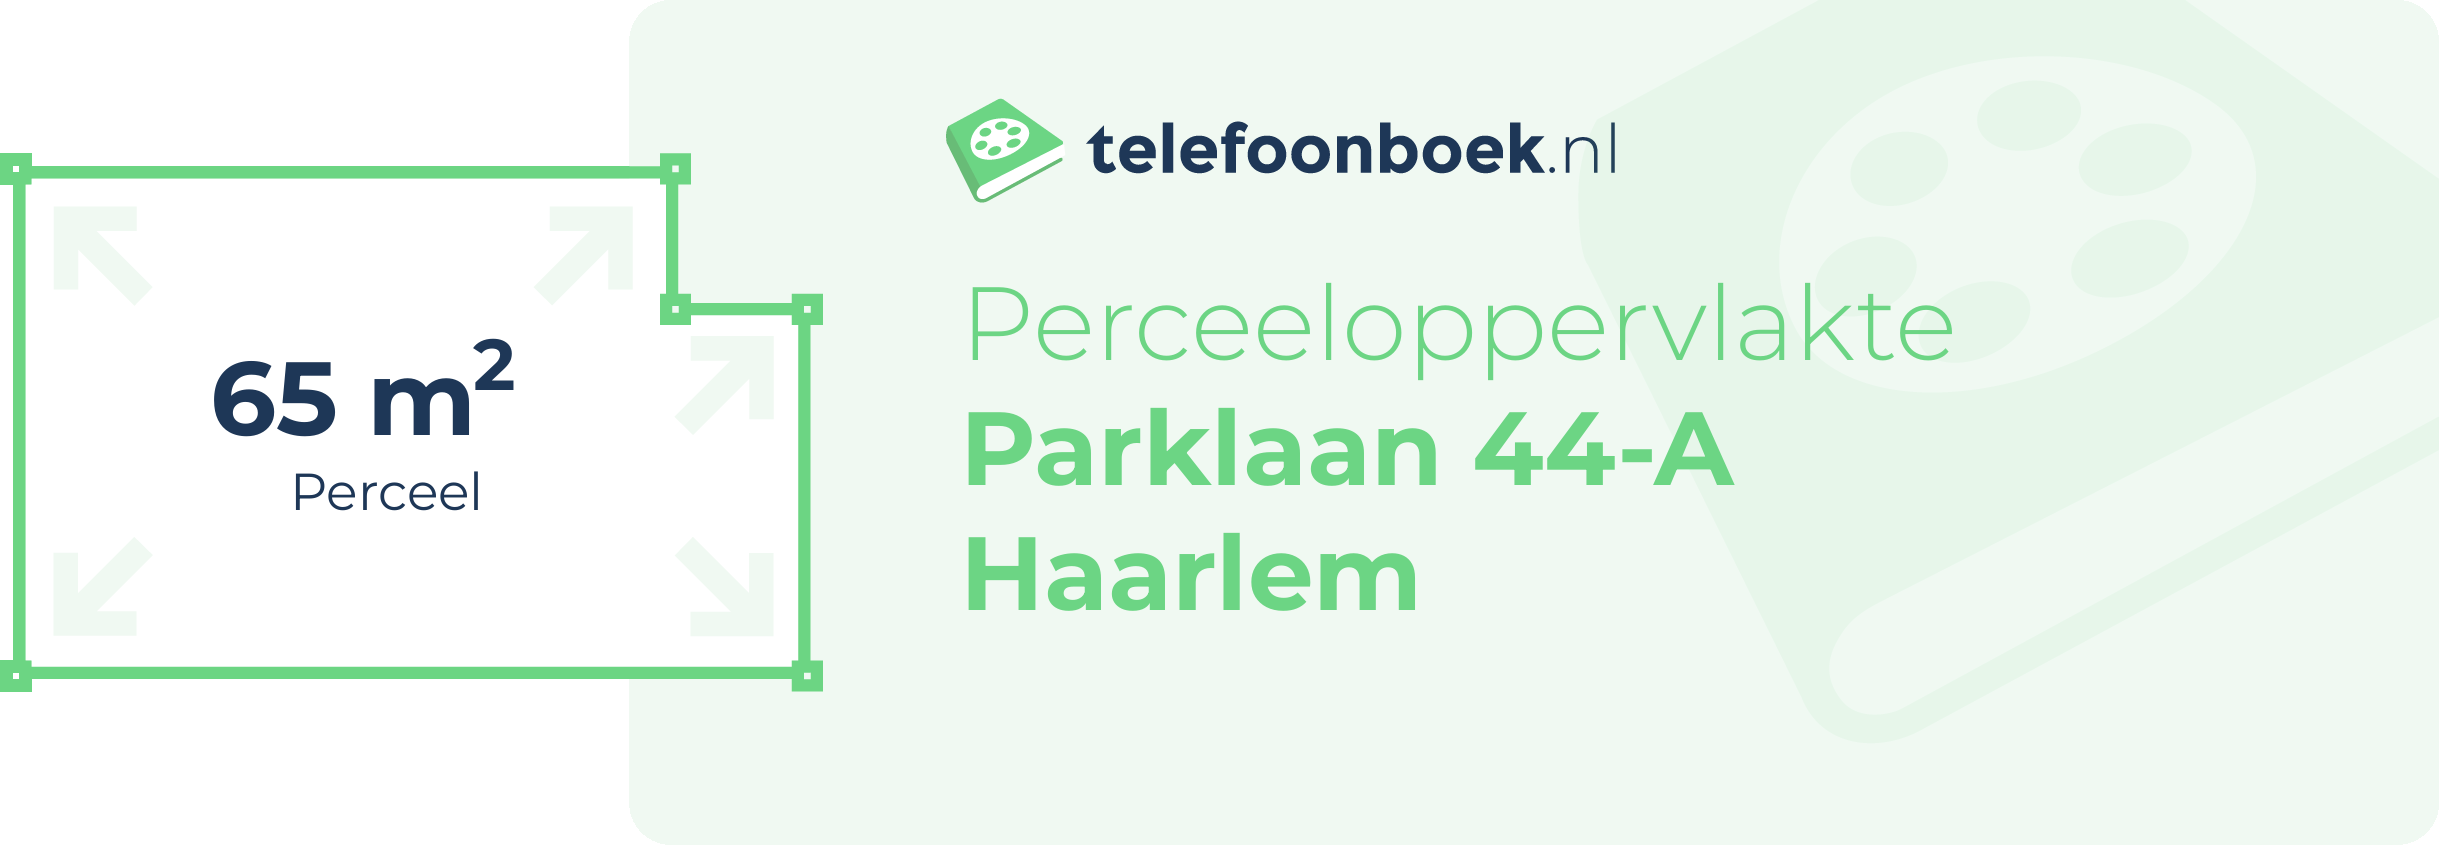 Perceeloppervlakte Parklaan 44-A Haarlem